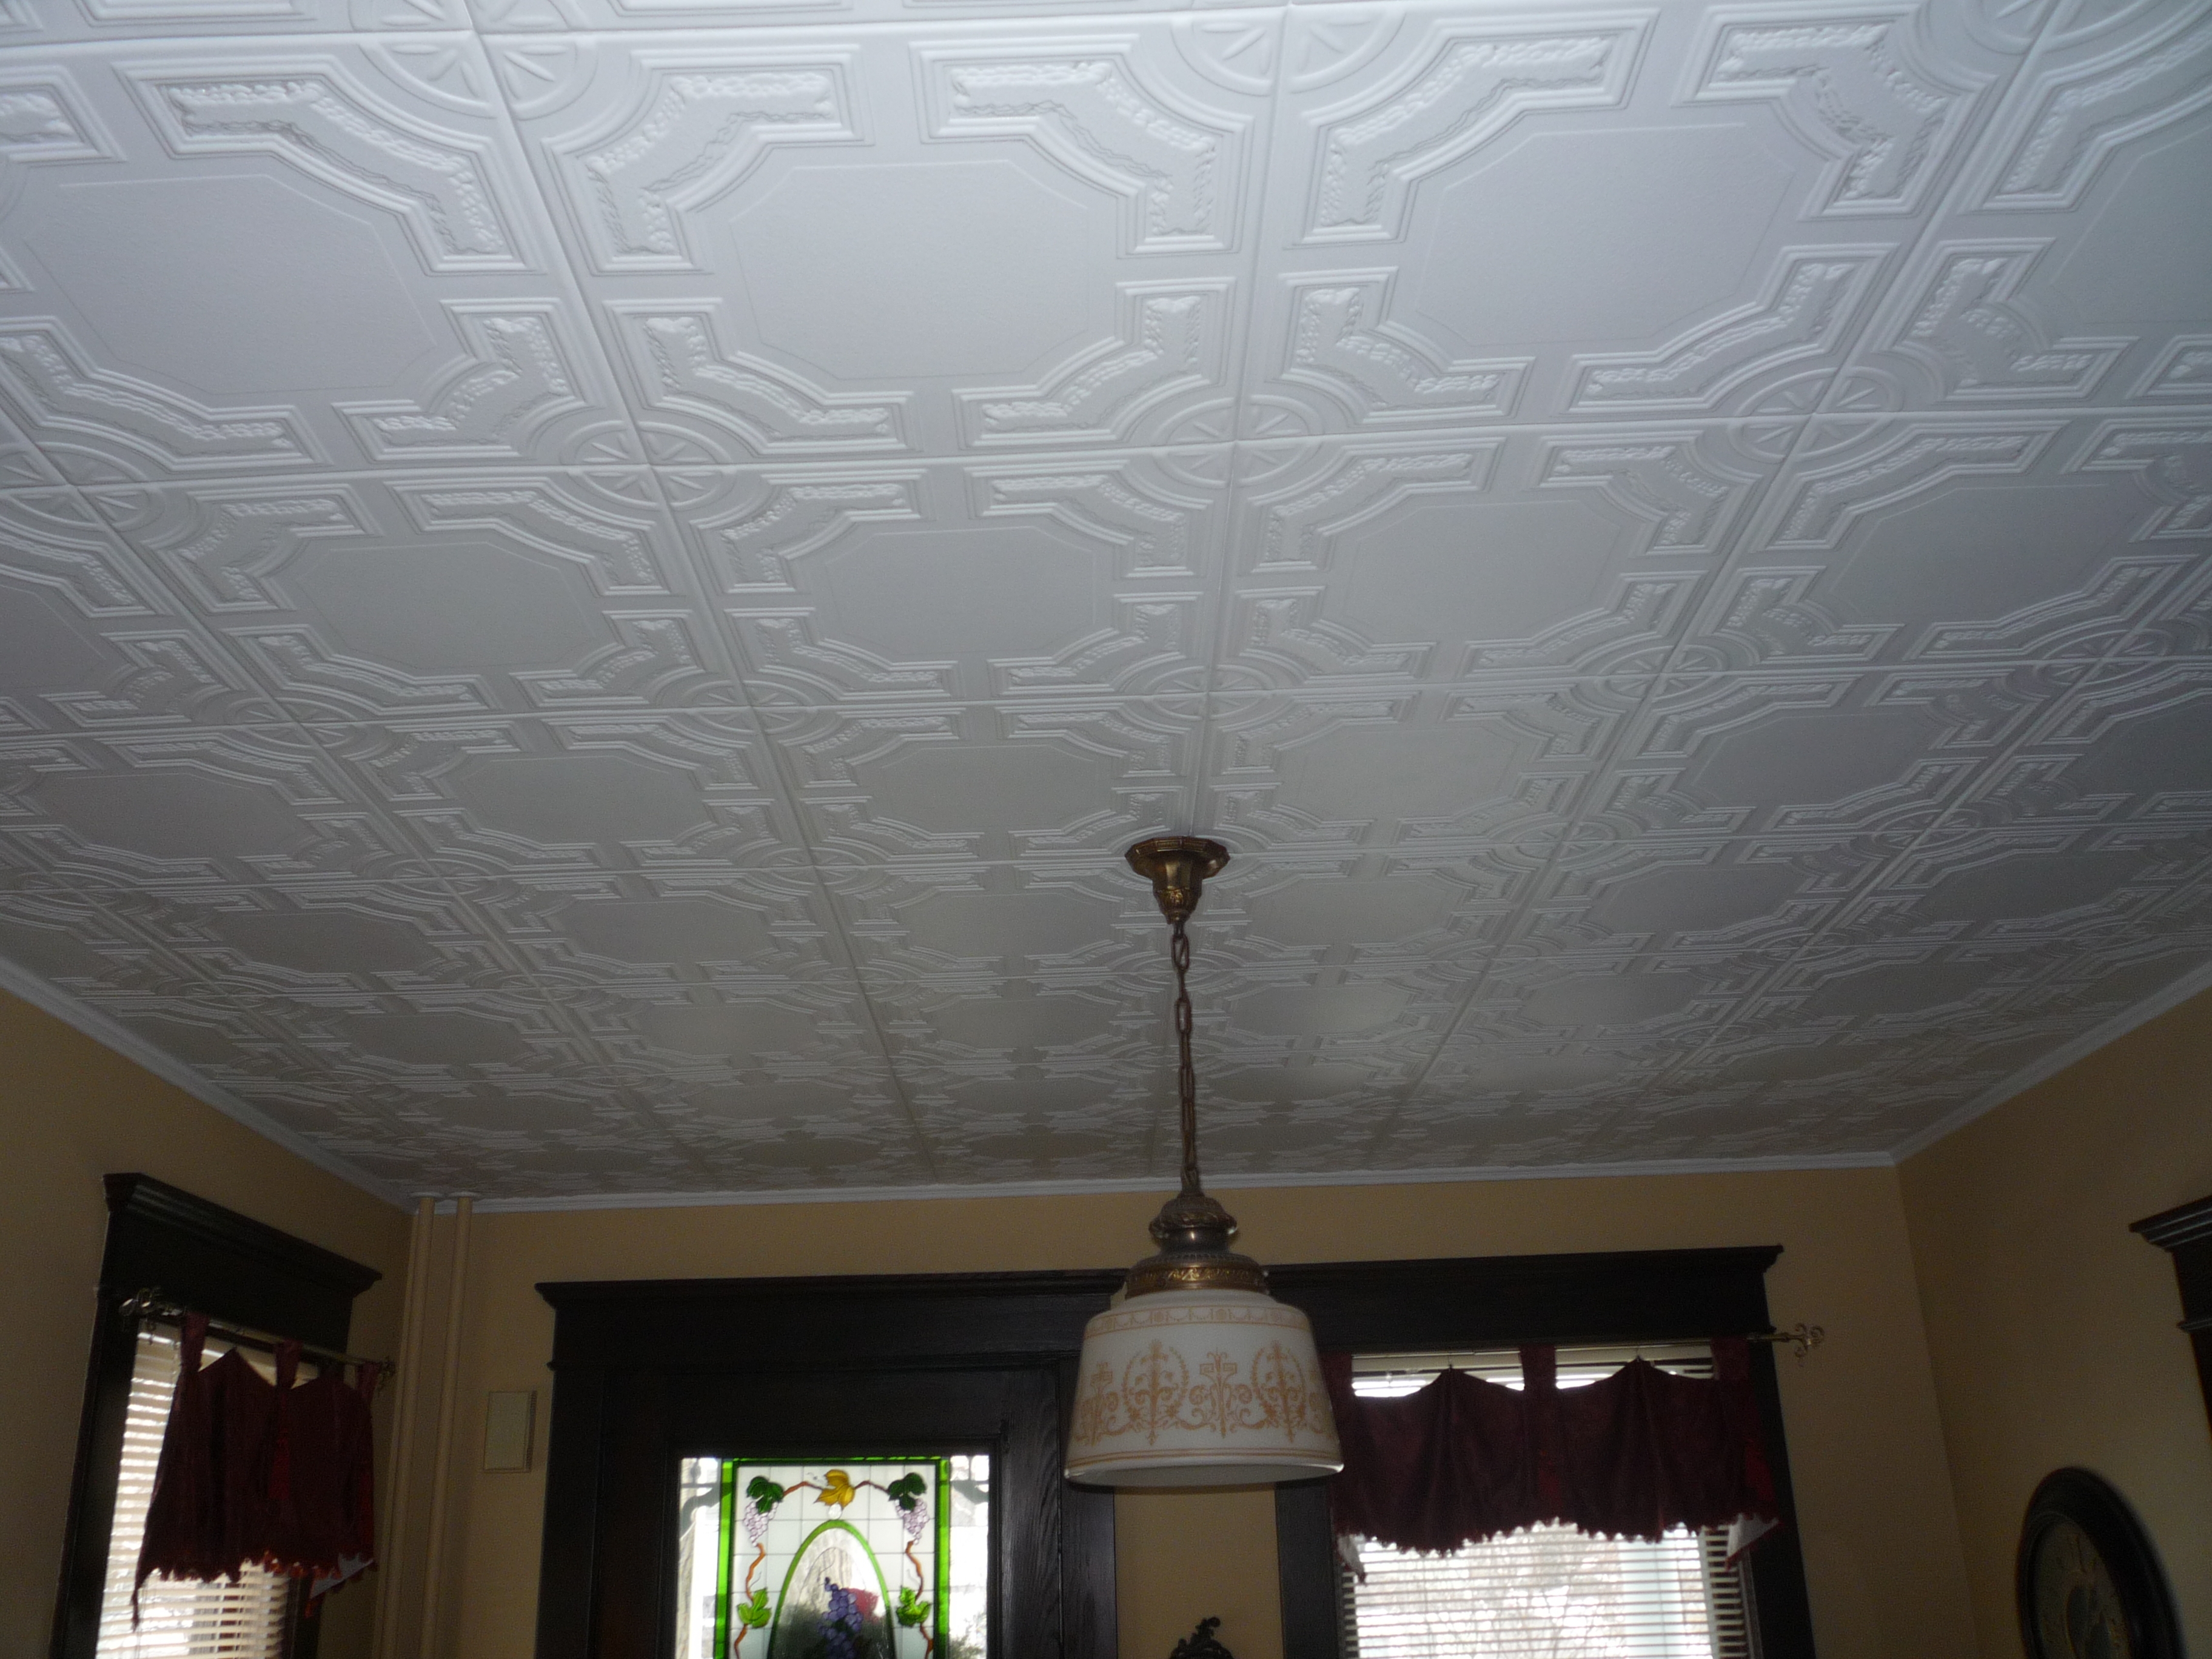 Styrofoam Ceiling Tiles 24x24 Styrofoam Ceiling Tiles 24×24 decor ceiling tiles 24x24 foam faux tiles drop ceiling tiles 3648 X 2736